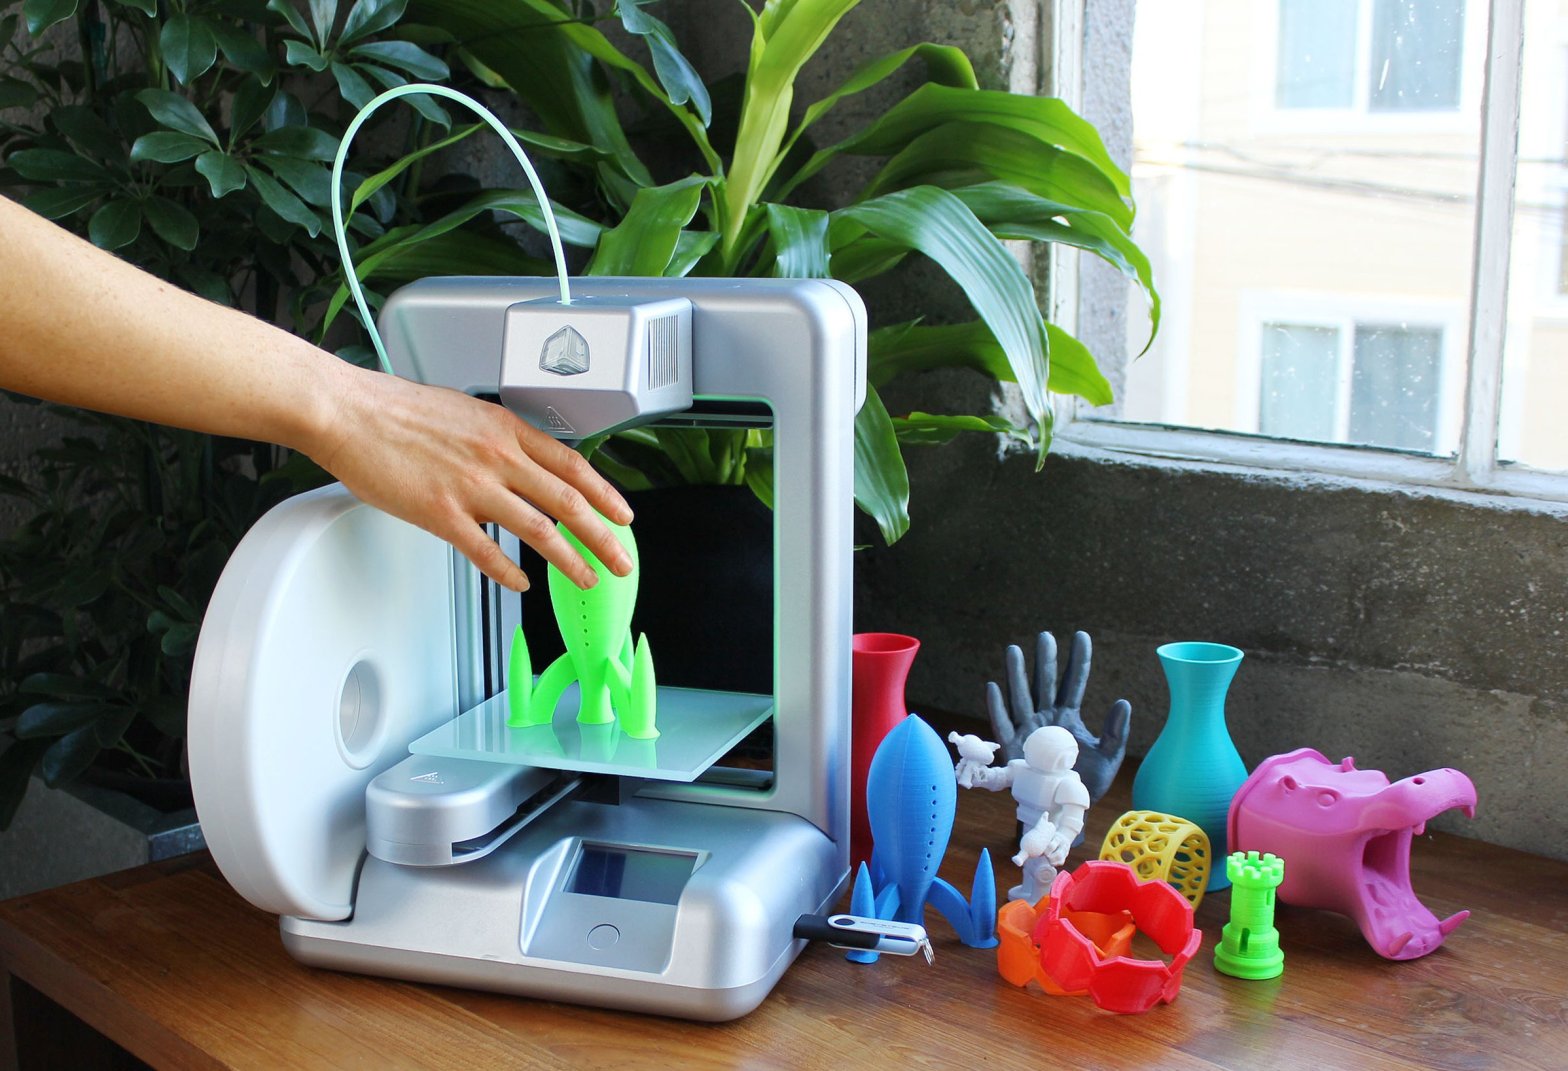 3D printing companies